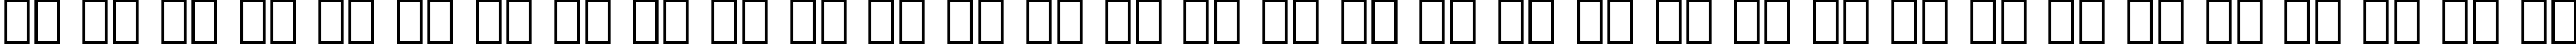 Пример написания русского алфавита шрифтом Futura Extra Black Italic BT